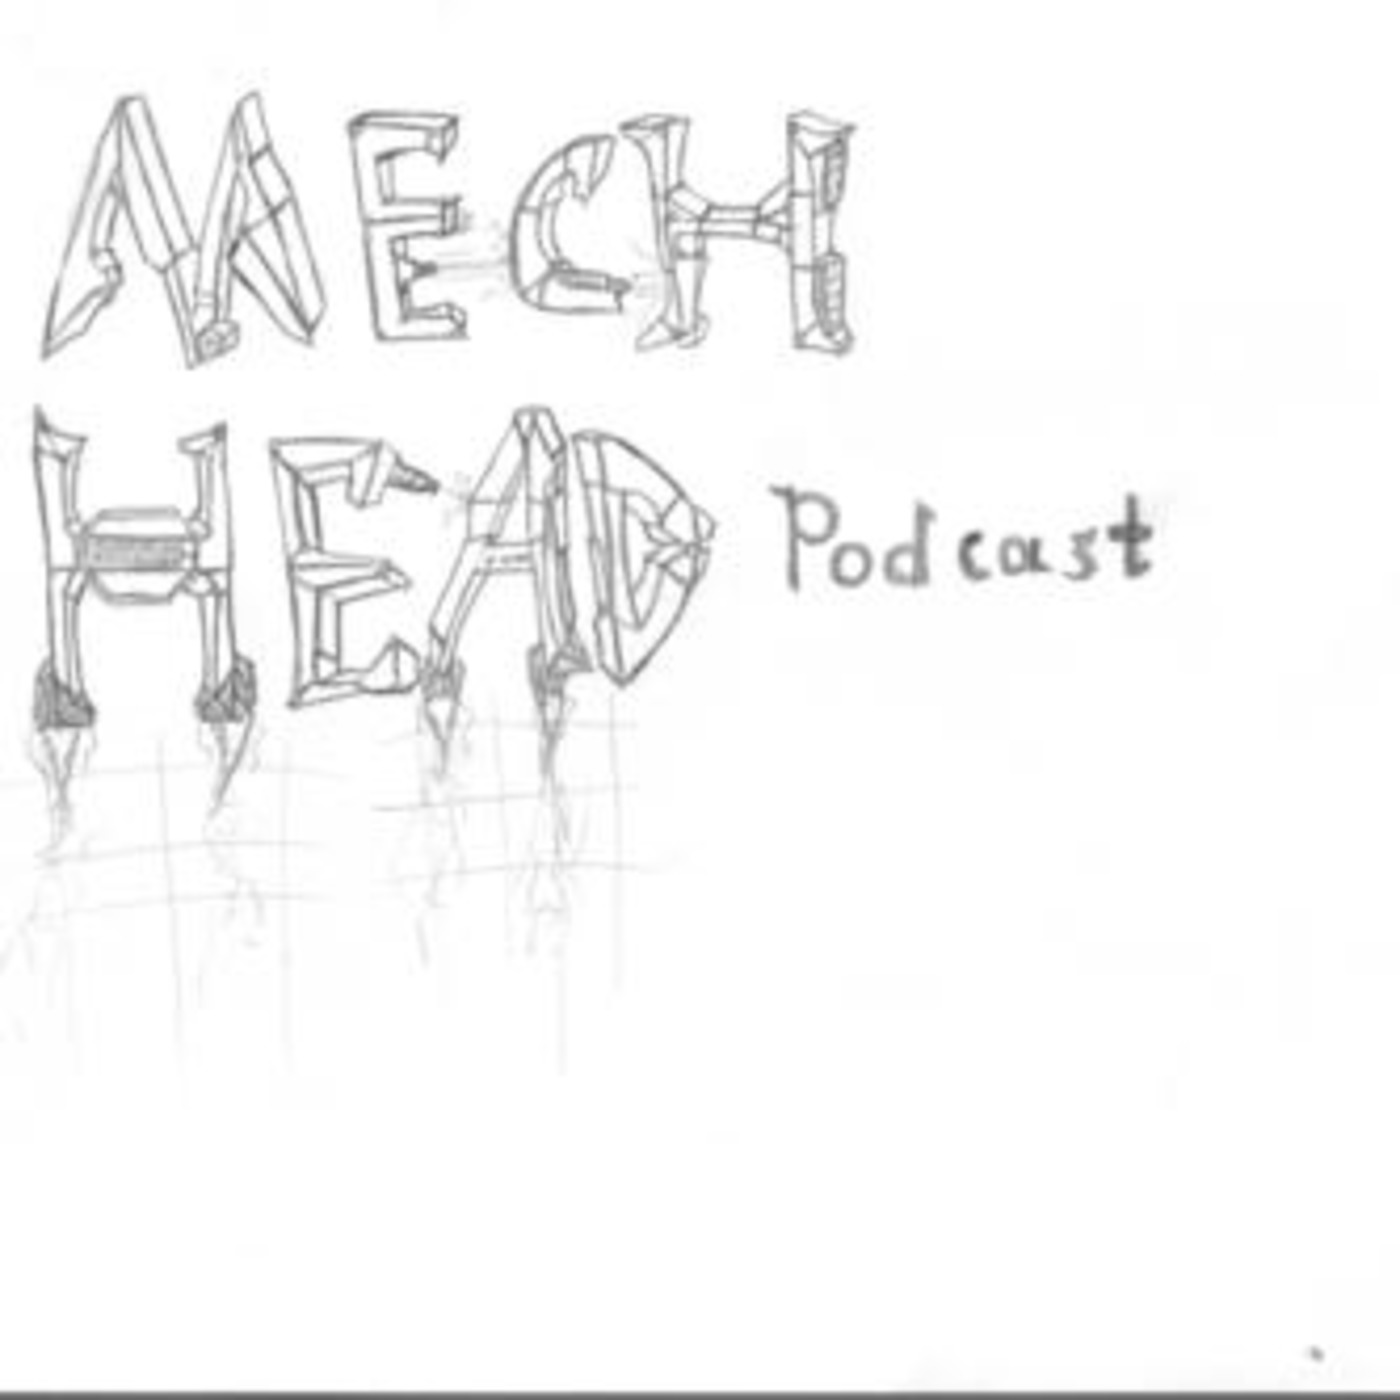 MechHead Podcast #33!